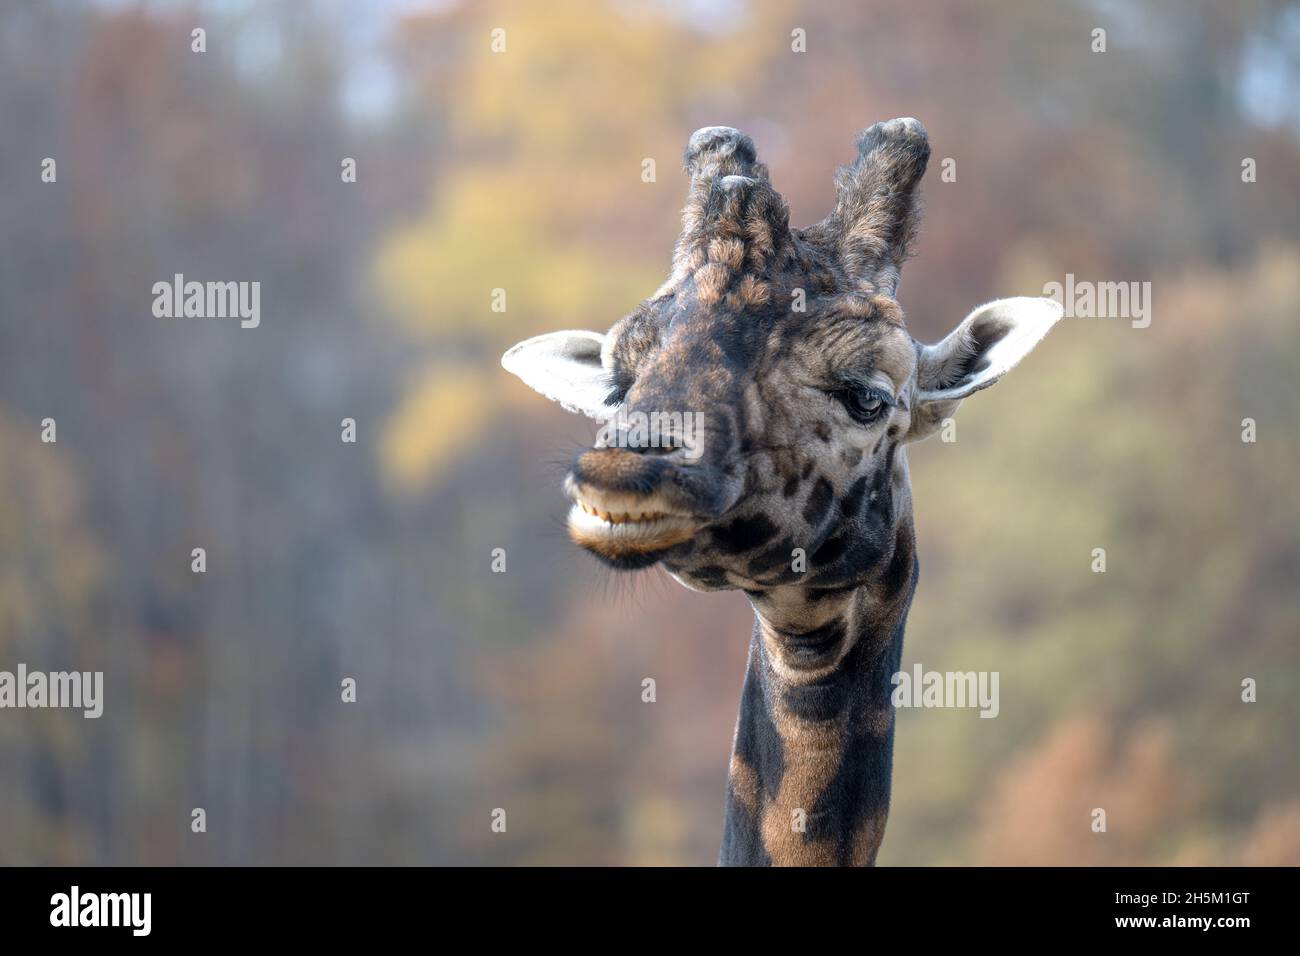 Portrait of a giraffe in the park. Stock Photo